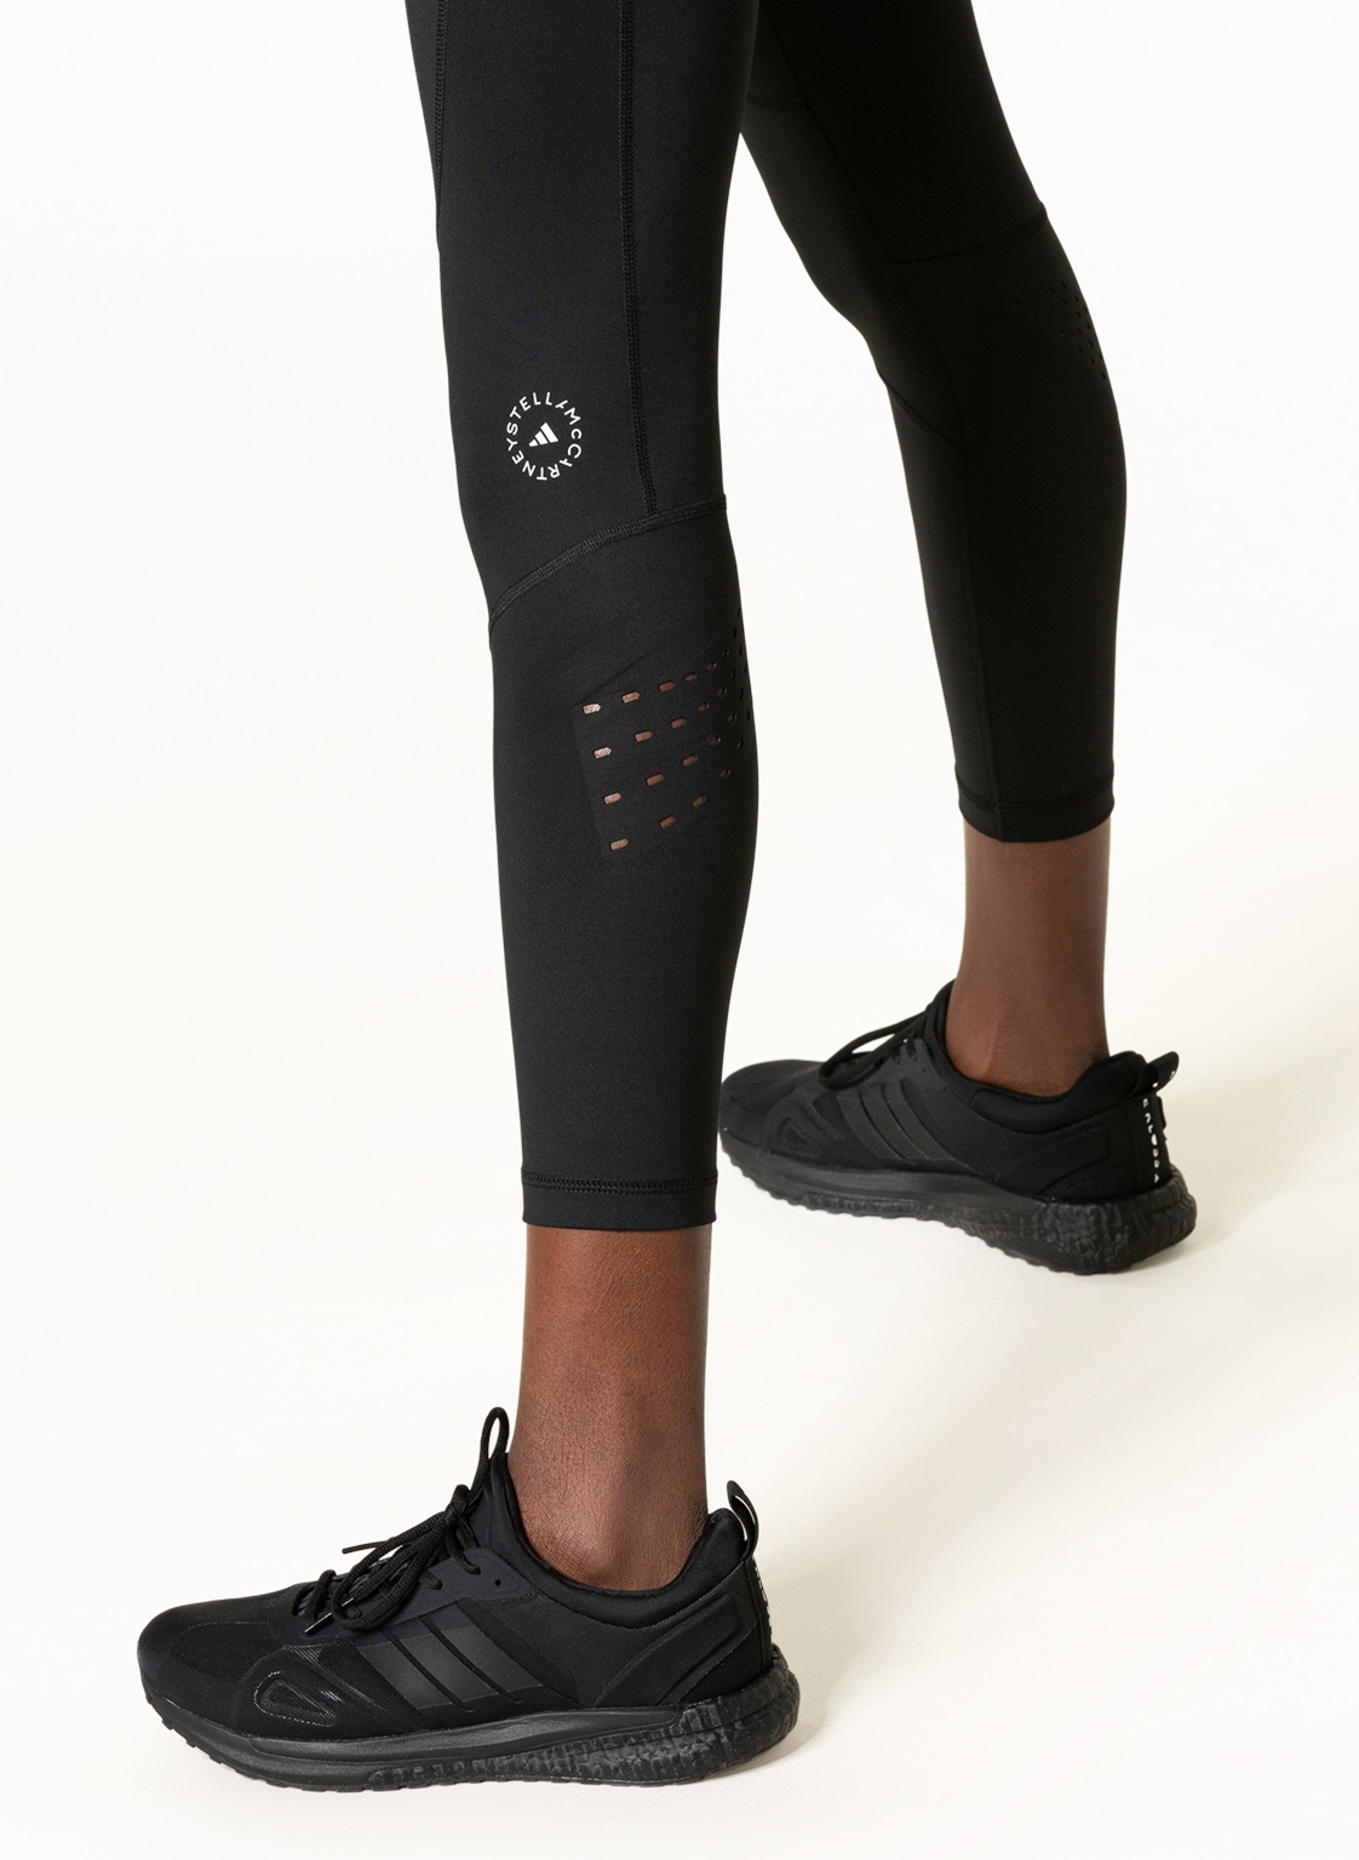 Buy Adidas By Stella McCartney Truepurpose Leggings - Black At 62